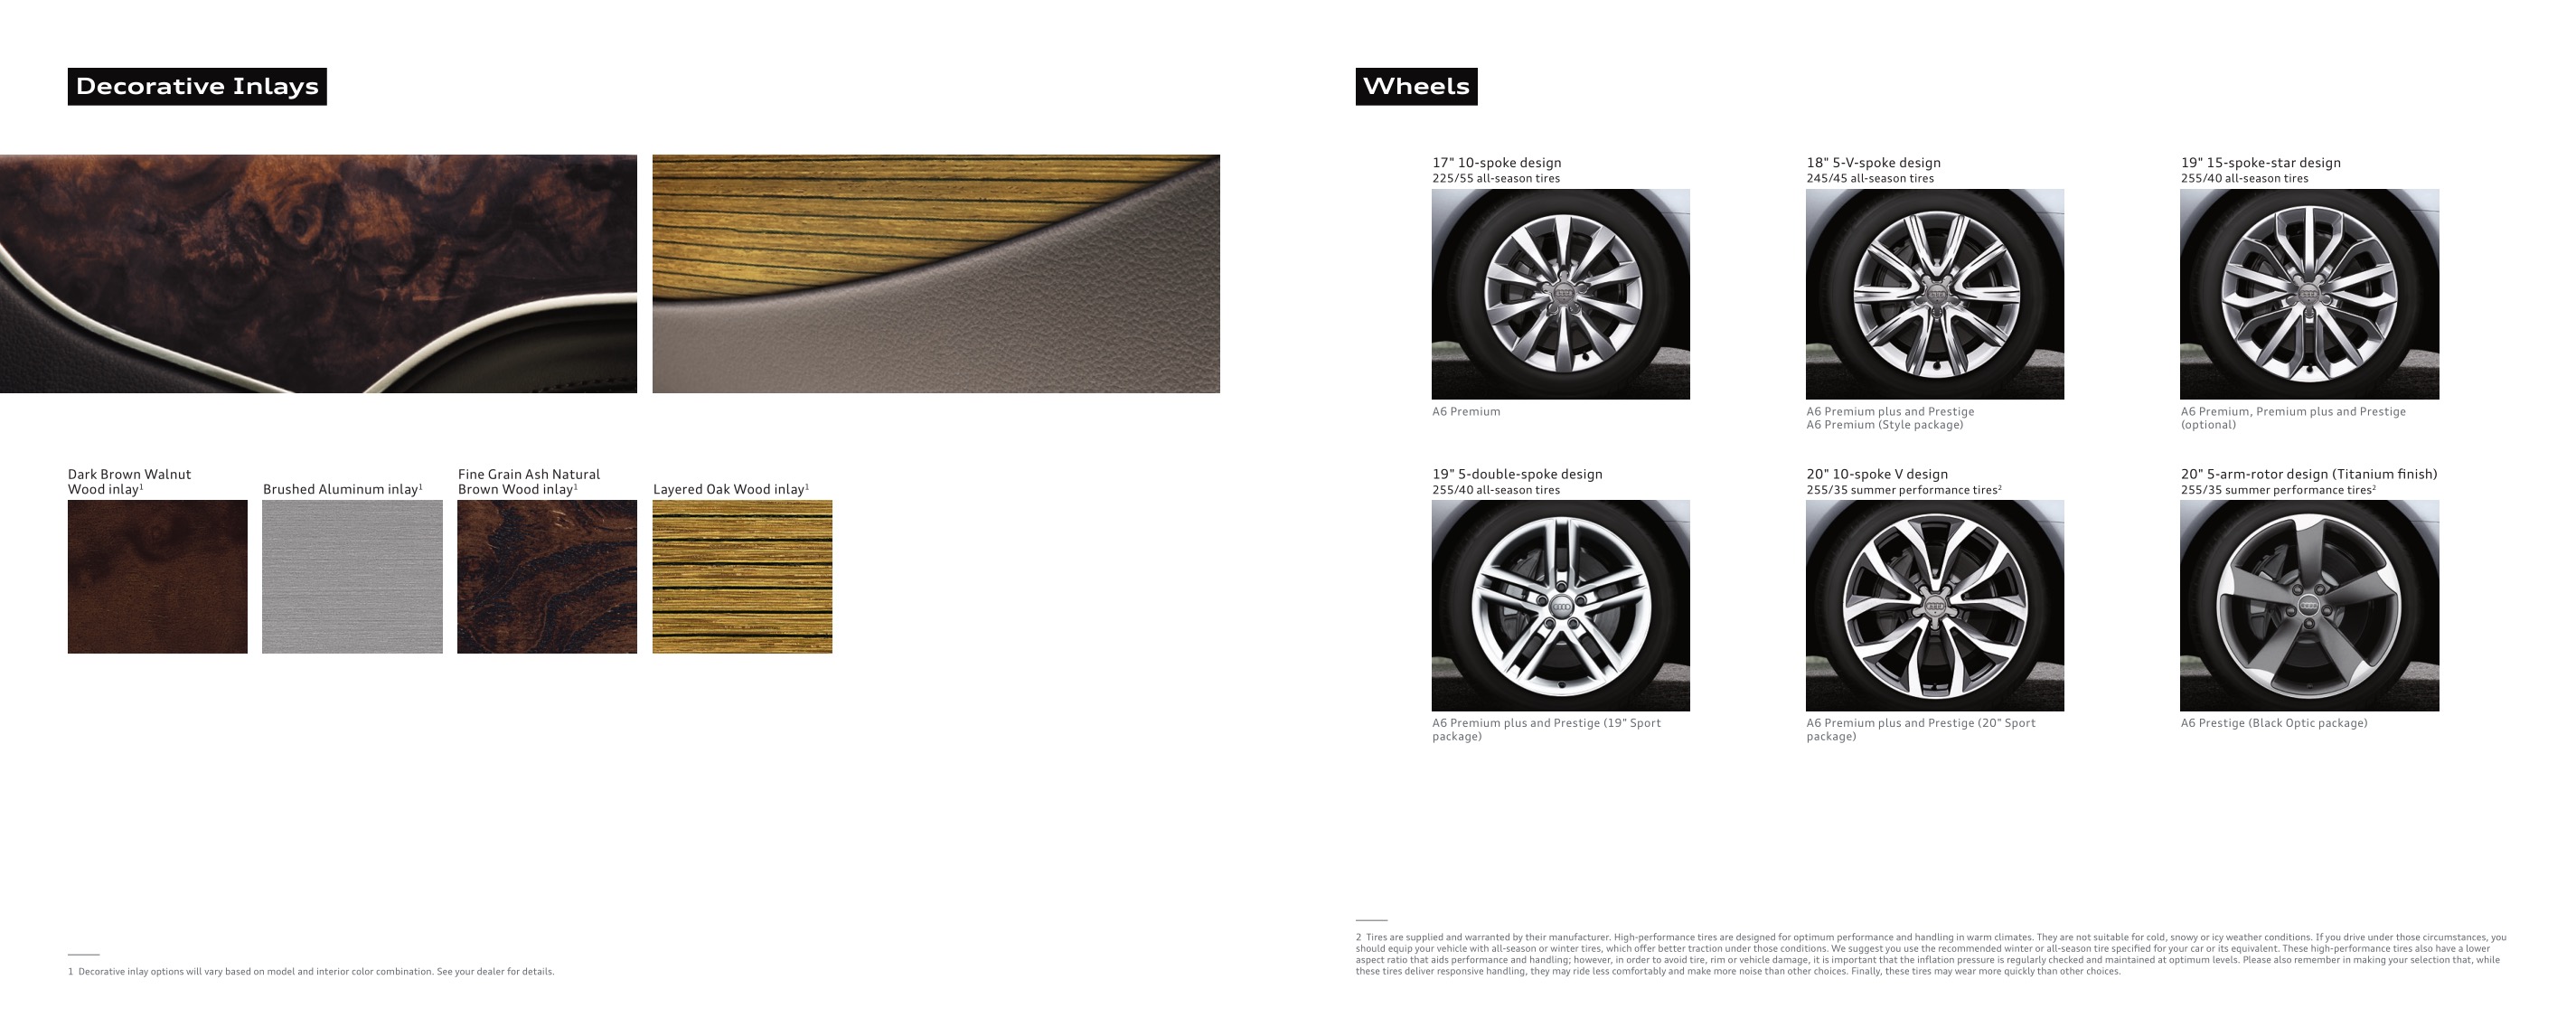 2014 Audi A6 Brochure Page 32